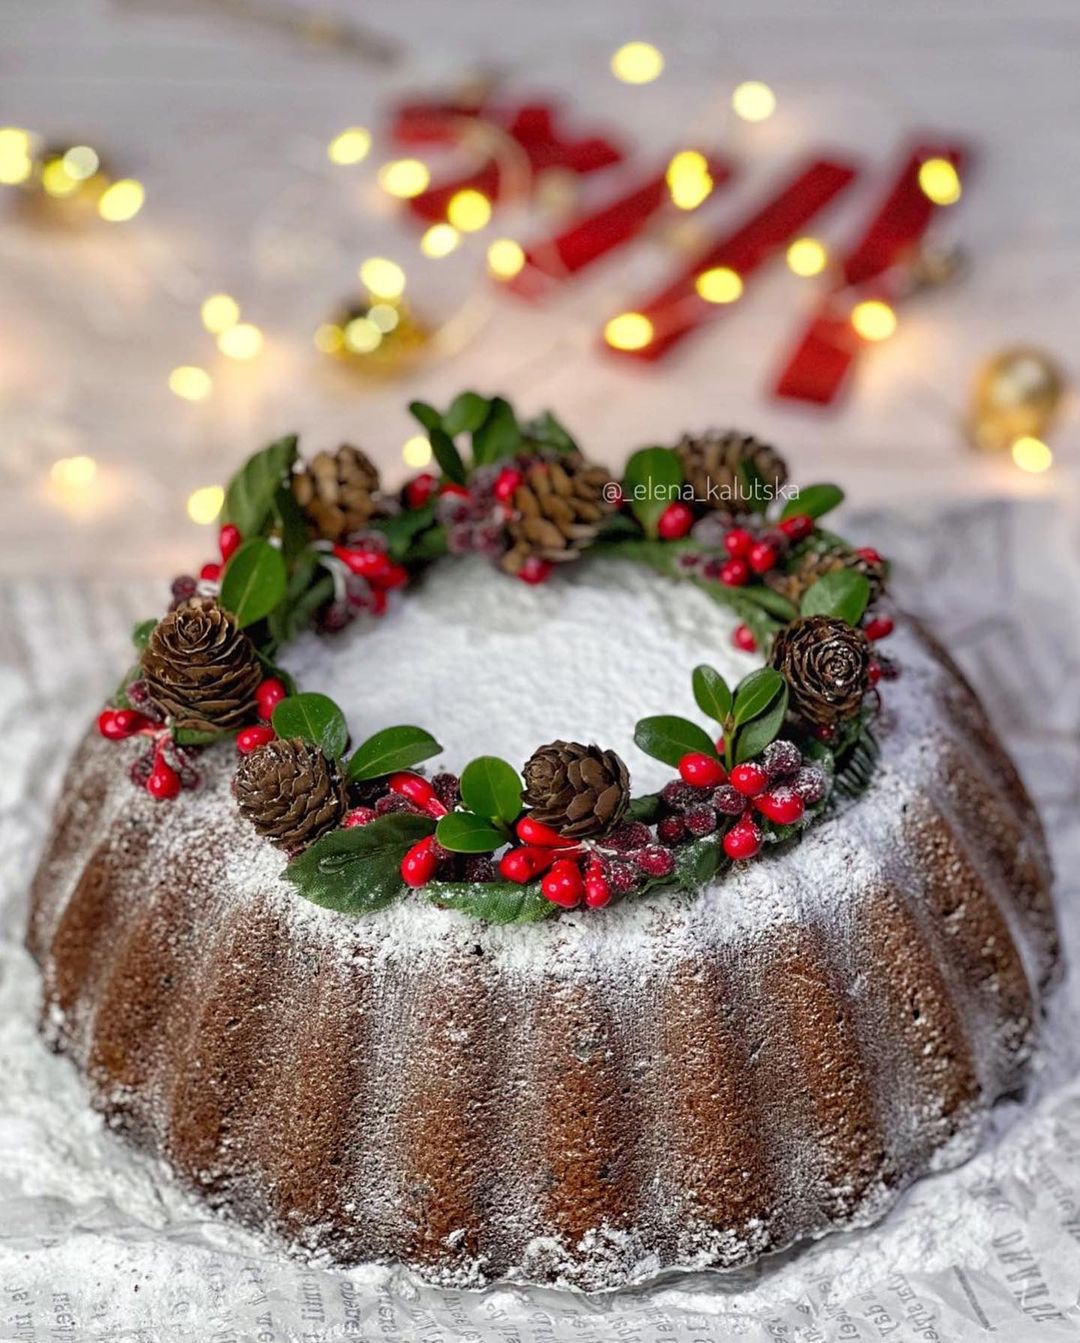 Orange & chocolate Christmas cake